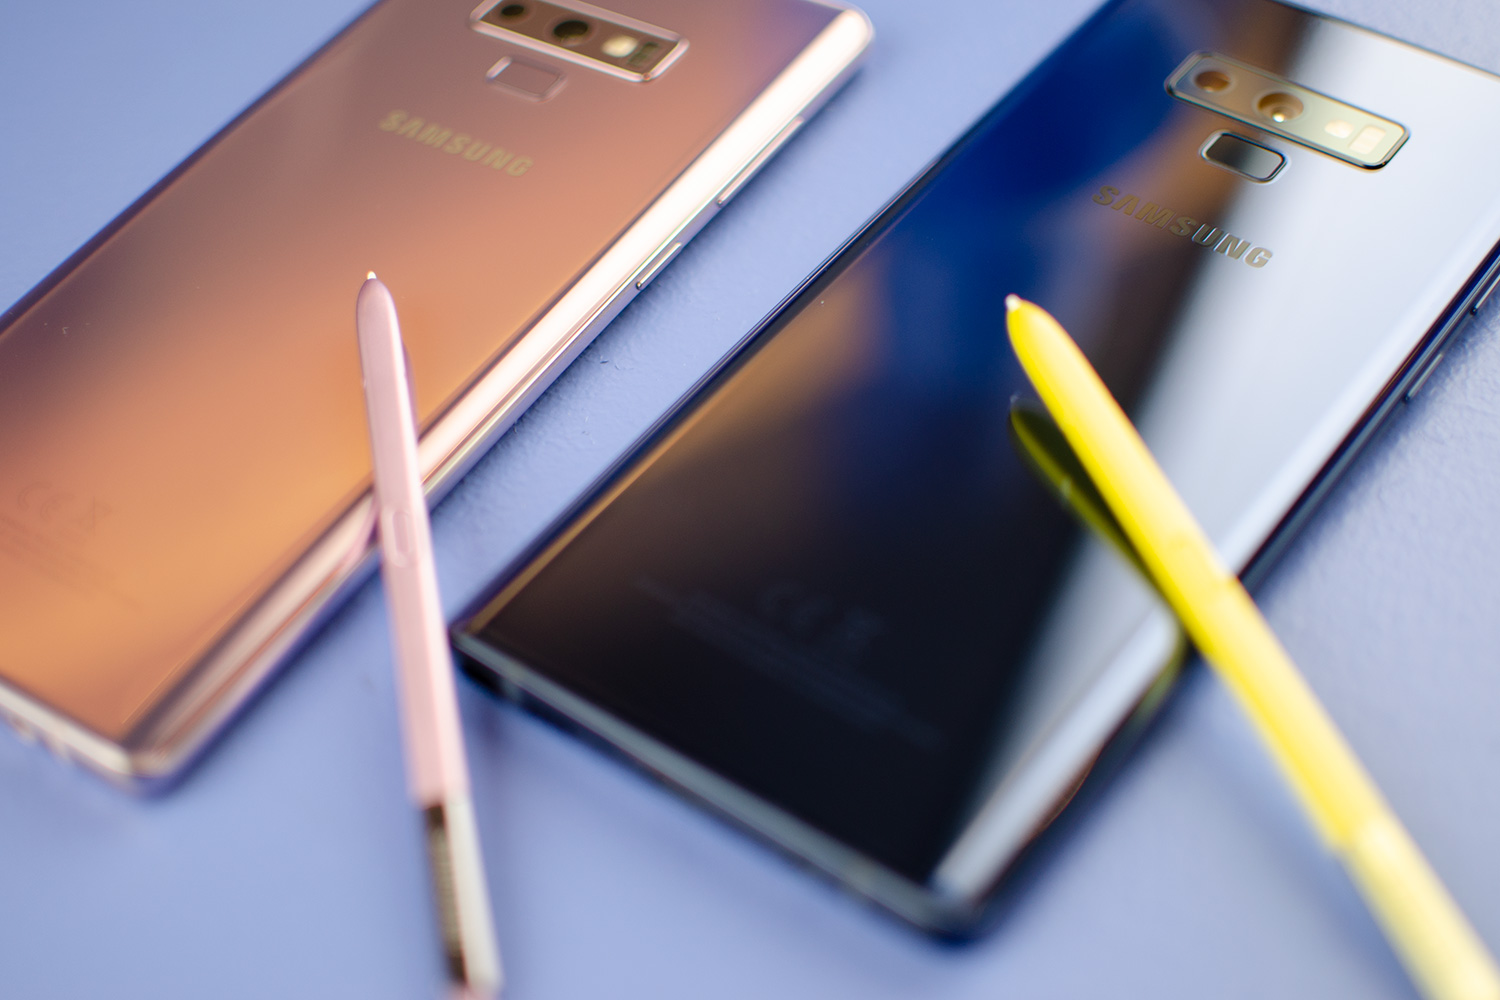 Samsung Galaxy Note 9. Samsung Galaxy s9 Note. Samsung Galaxy Note 9 бронзовый. Самсунг нот 8. Смартфоны самсунг ноут